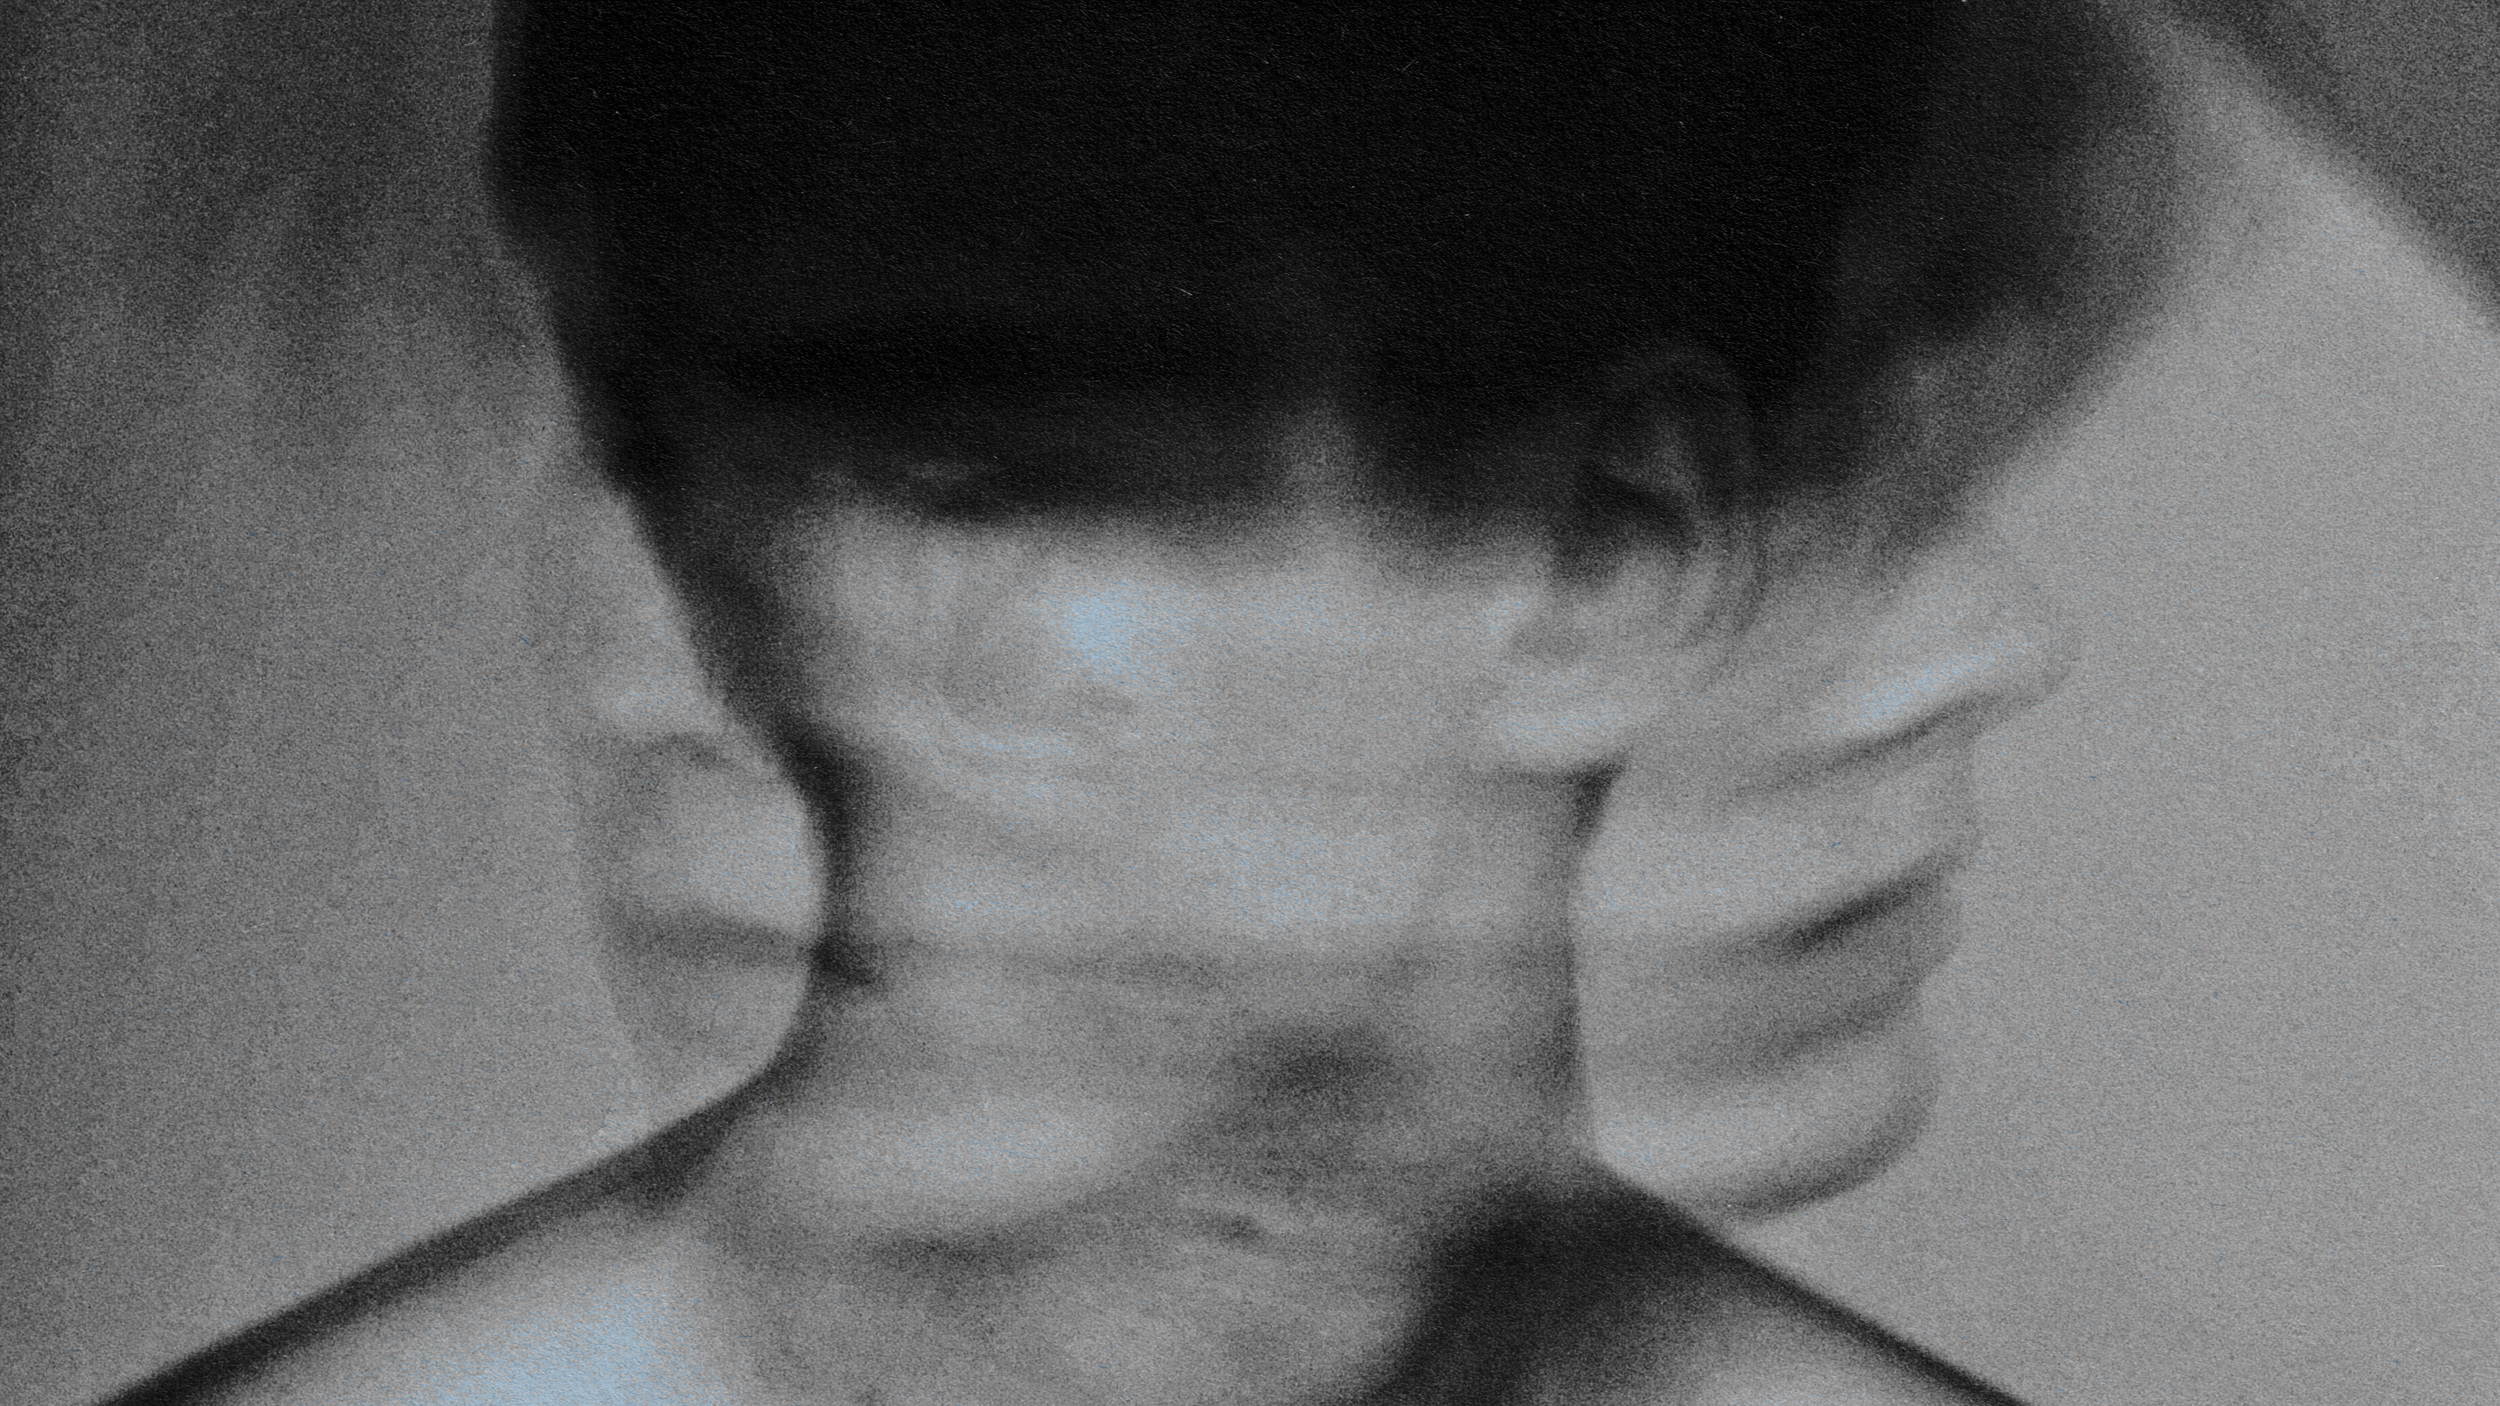 A monochrome portrait showcasing a man's head.